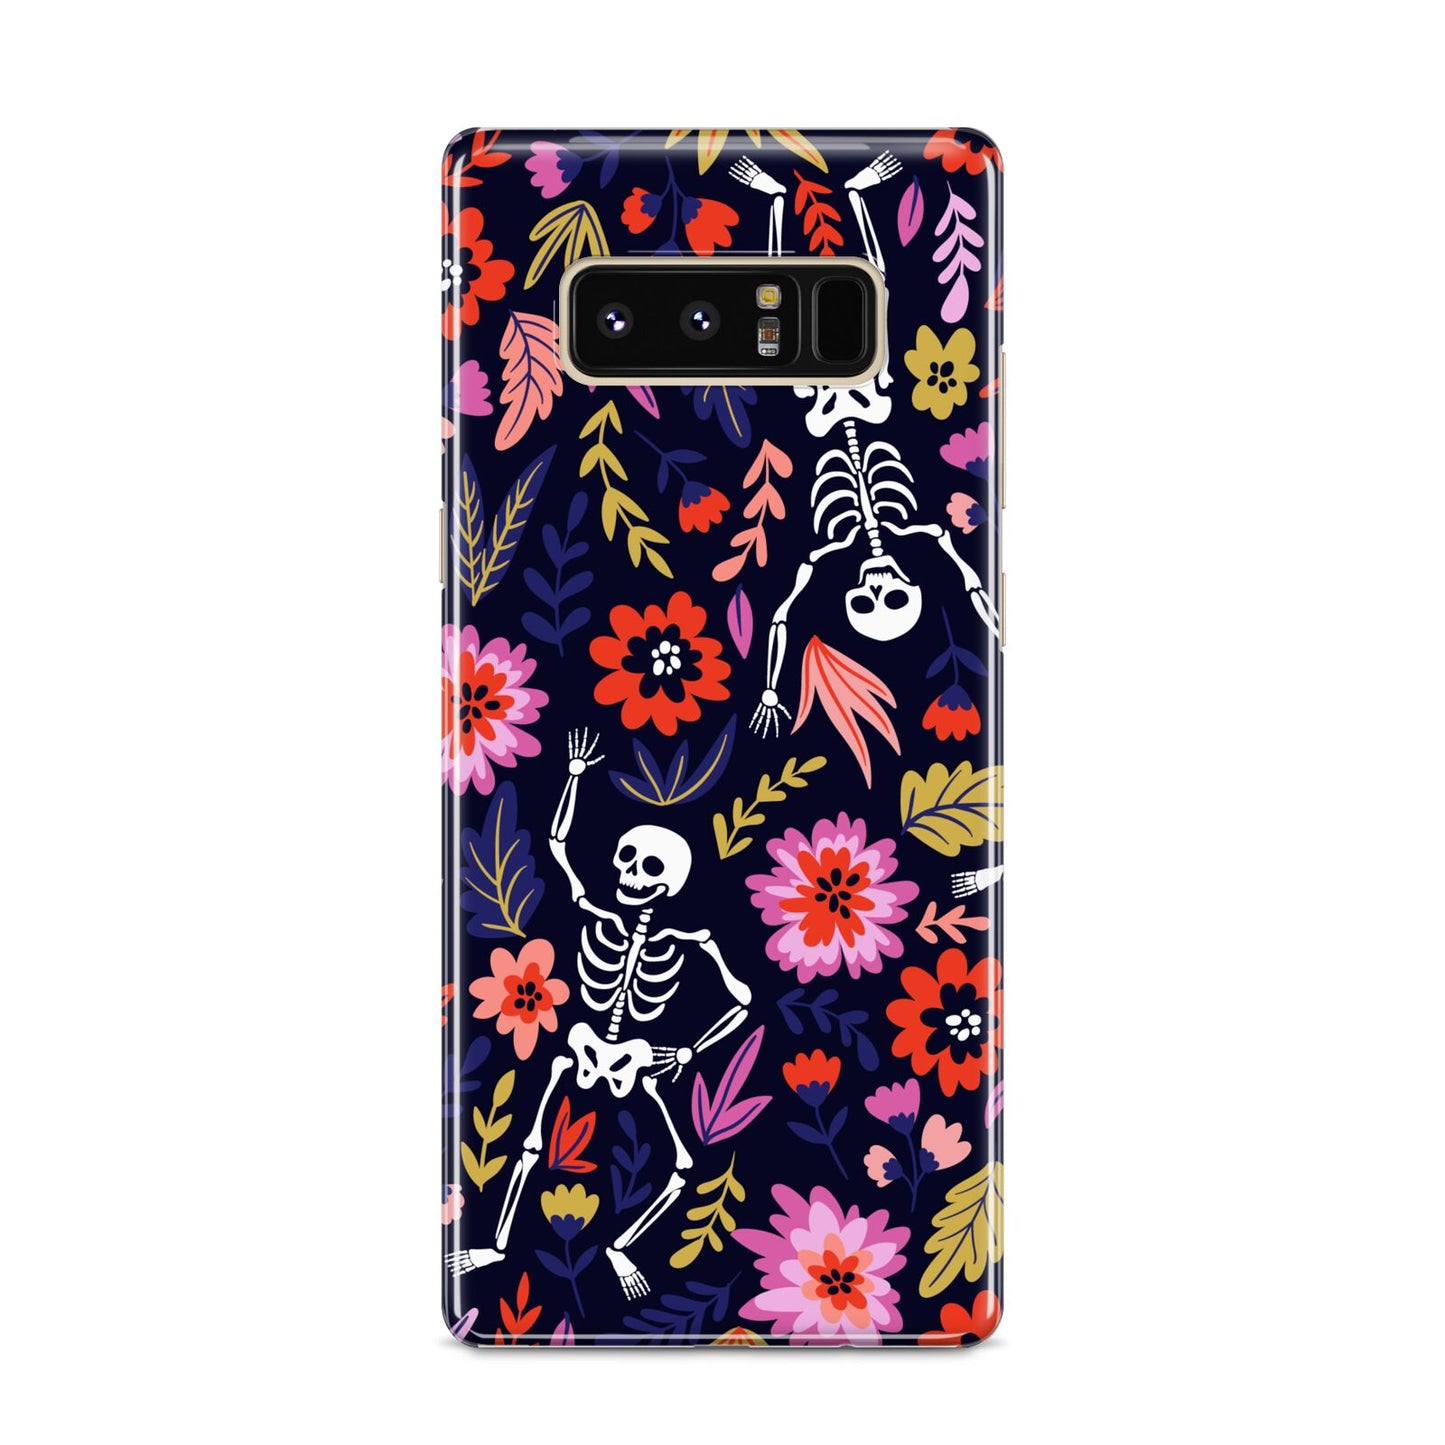 Floral Skeleton Samsung Galaxy S8 Case